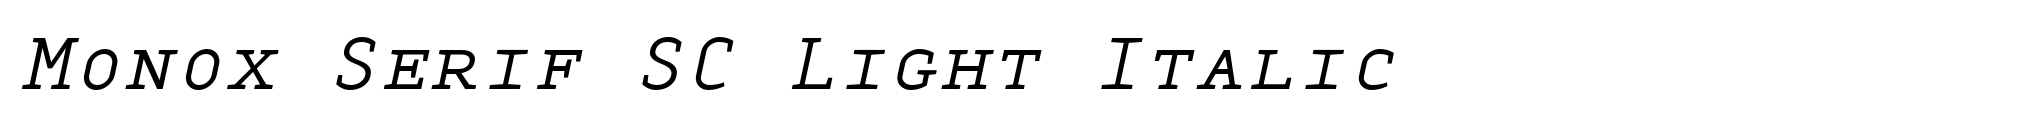 Monox Serif SC Light Italic image